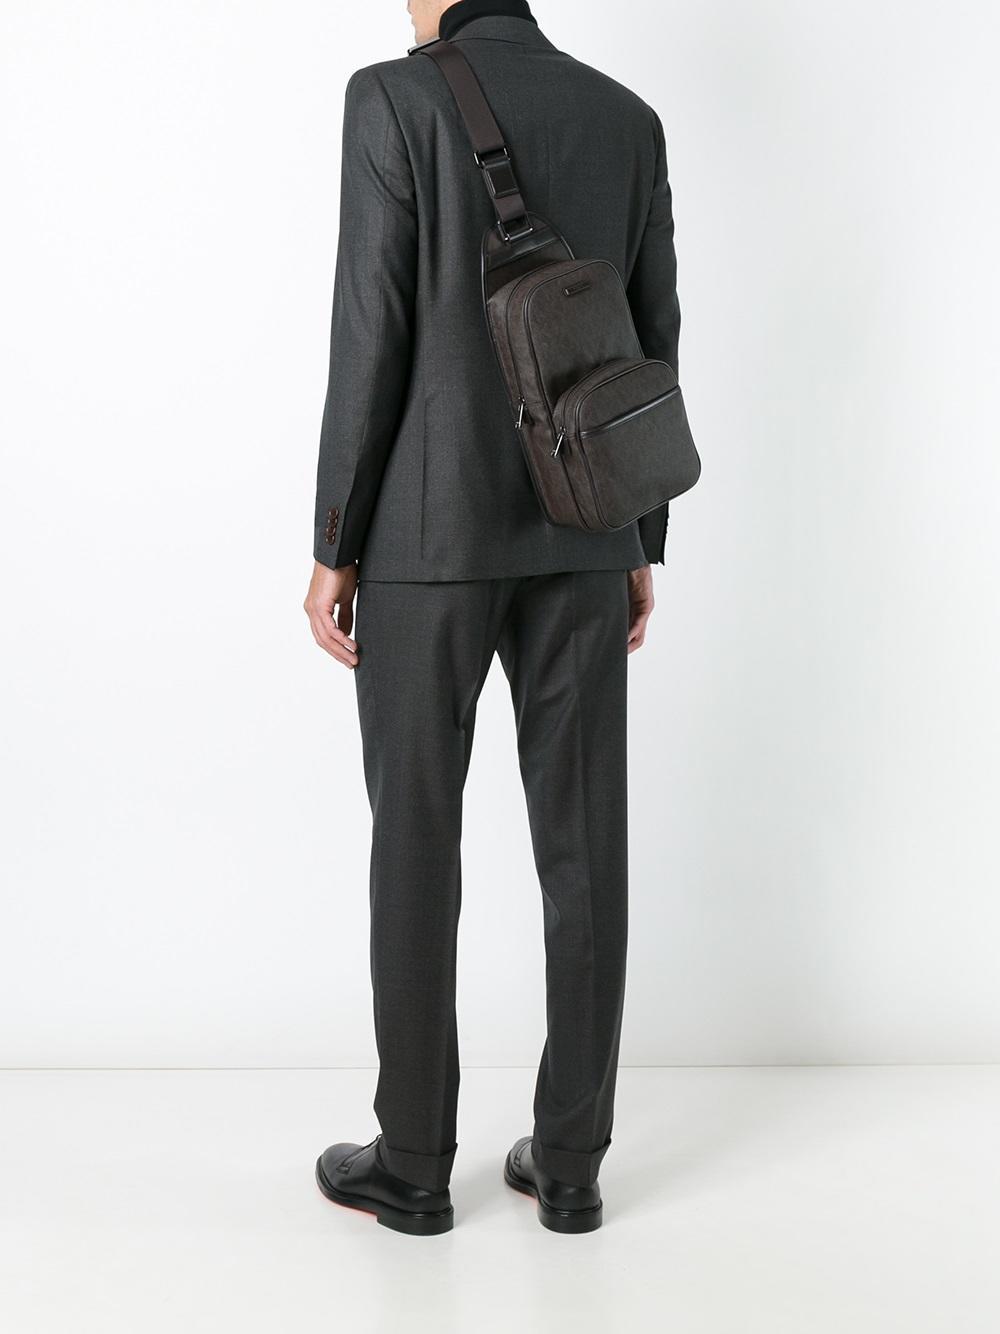 Michael Kors Cotton 'jet Set Logo Sling' Backpack in Brown for Men - Lyst